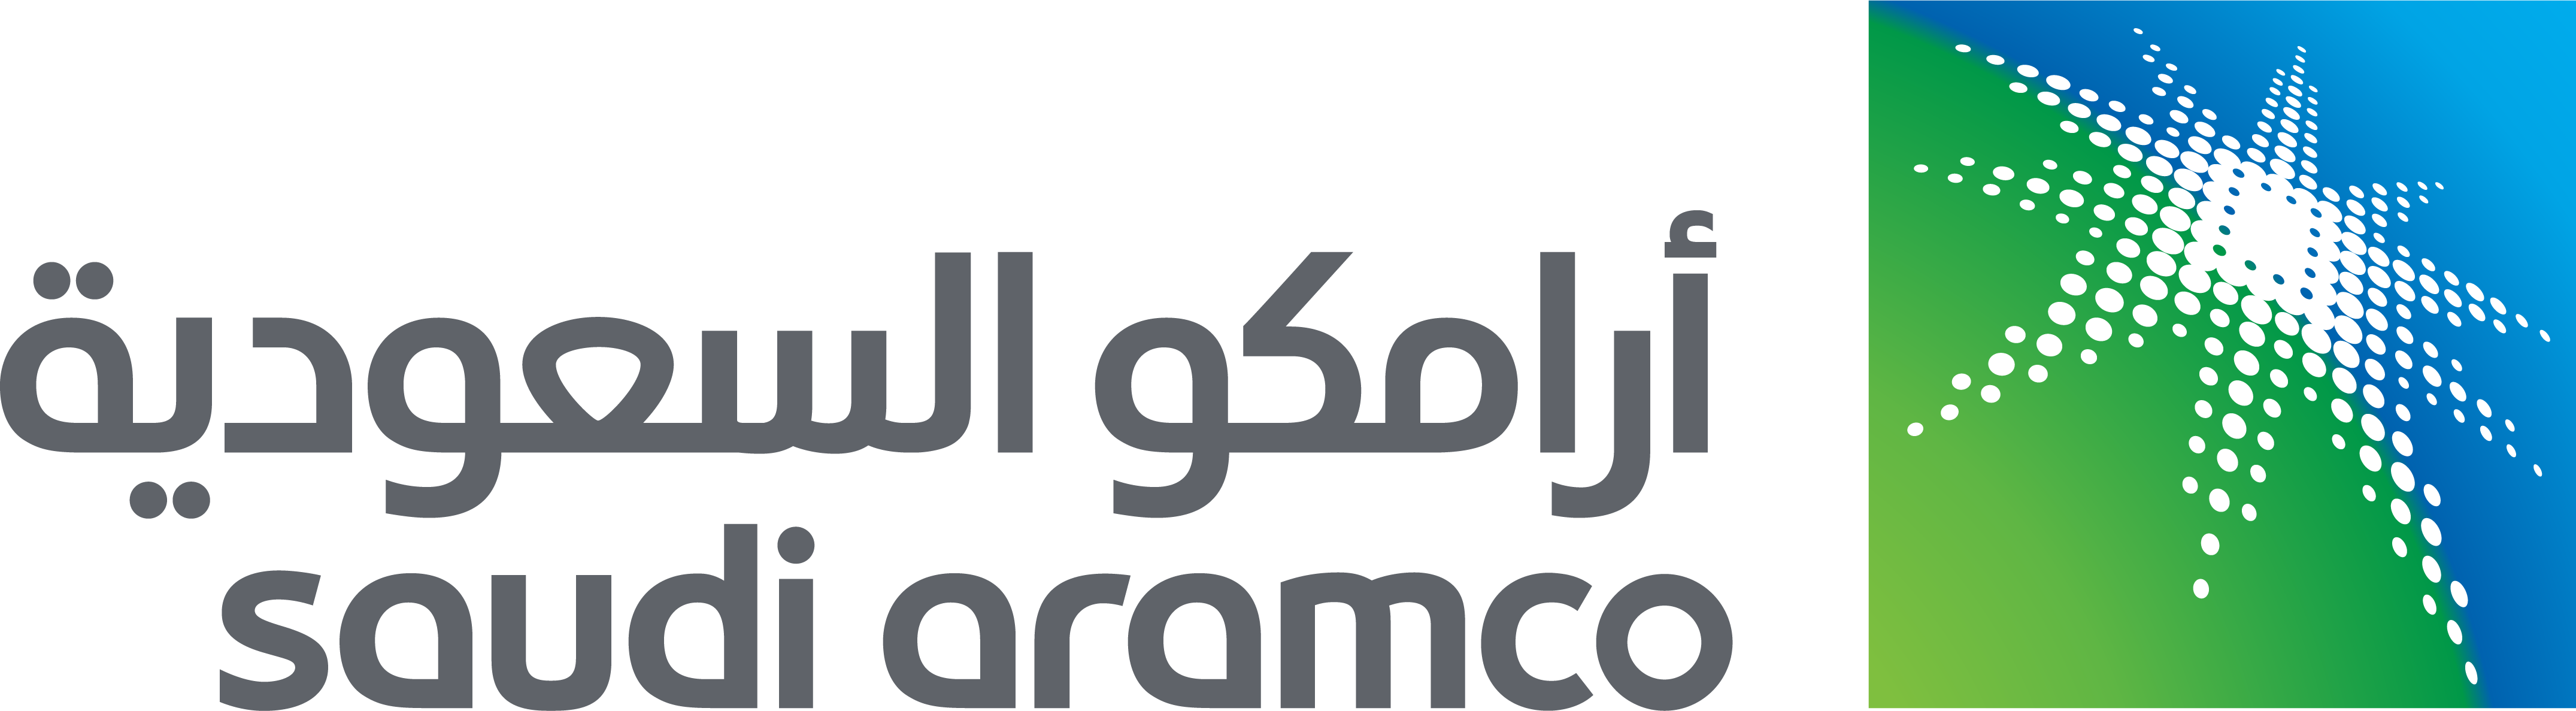 Saudi Aramco,  Abqaiq Laboratory (ABQ)